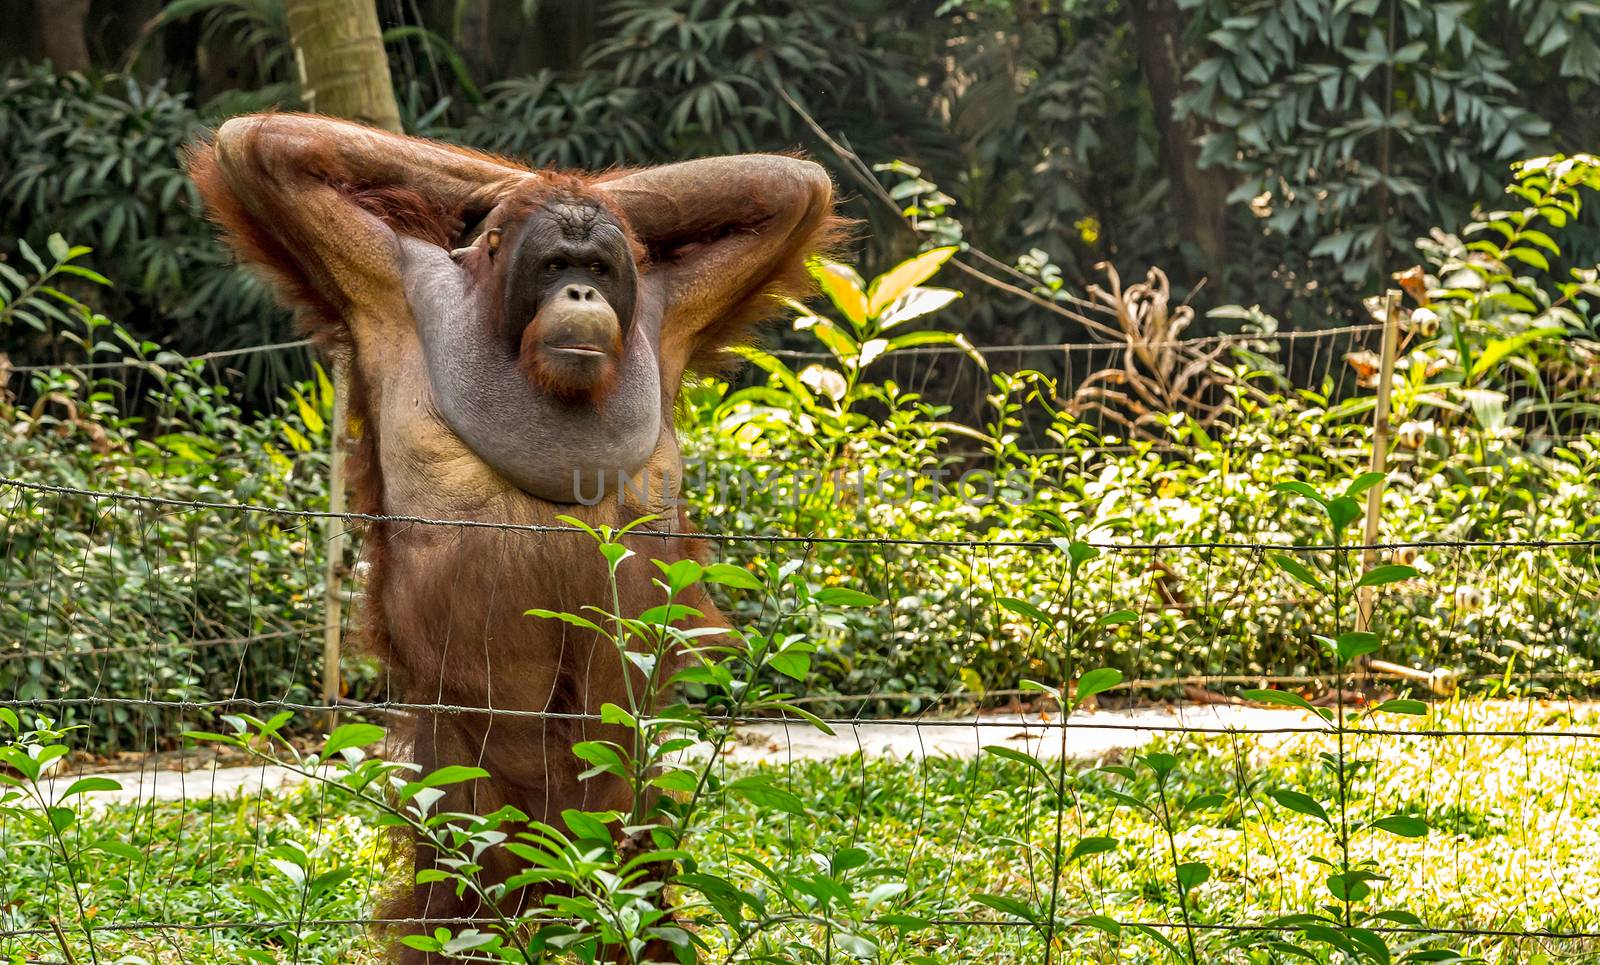 Orangutan Kalimantan Indonesia or Pongo pygmaeus by Vladyslav